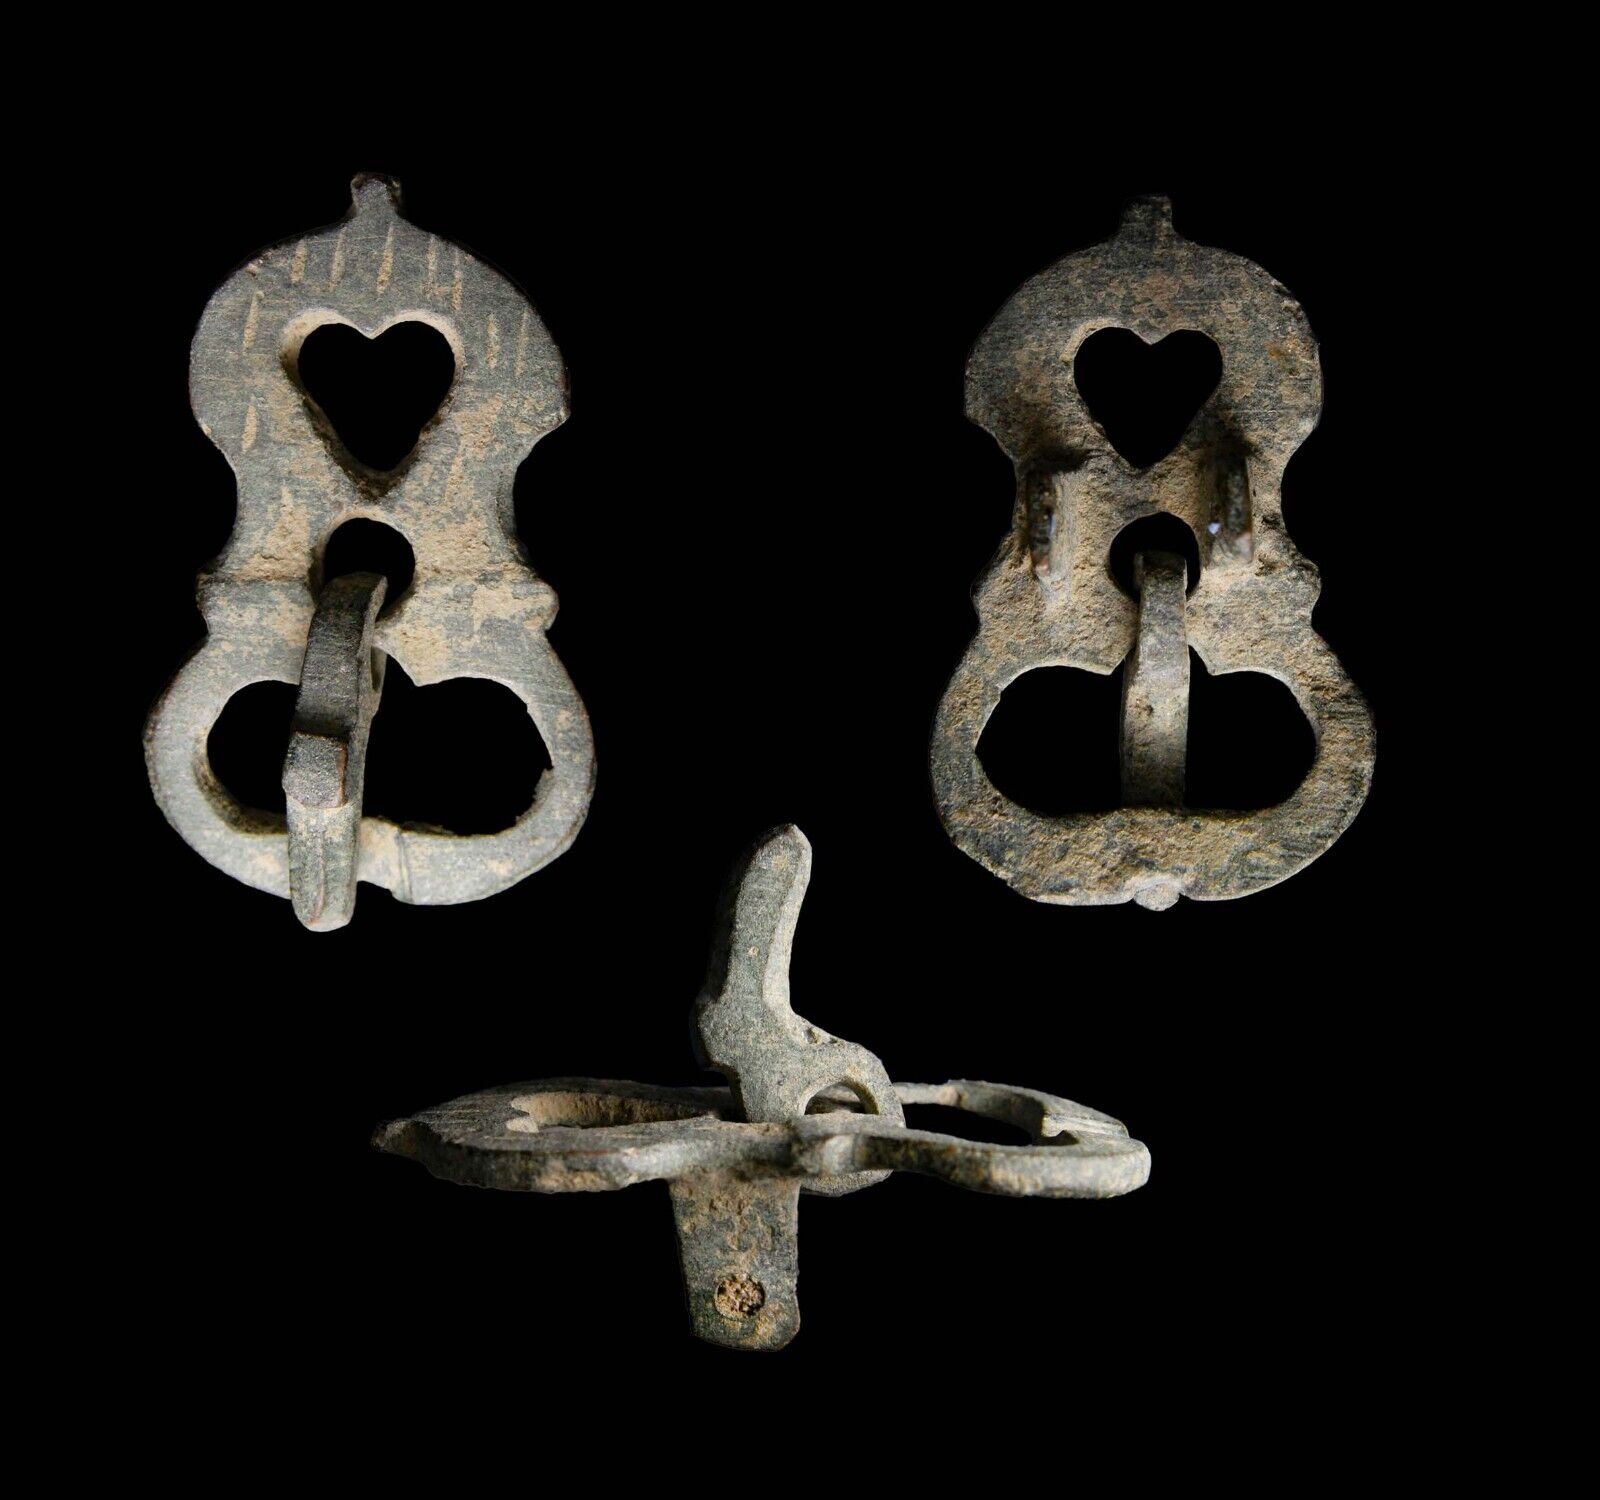 Certified Ancient Roman Artifact Antiquity Heart Shaped Belt Buckle Imperial Era